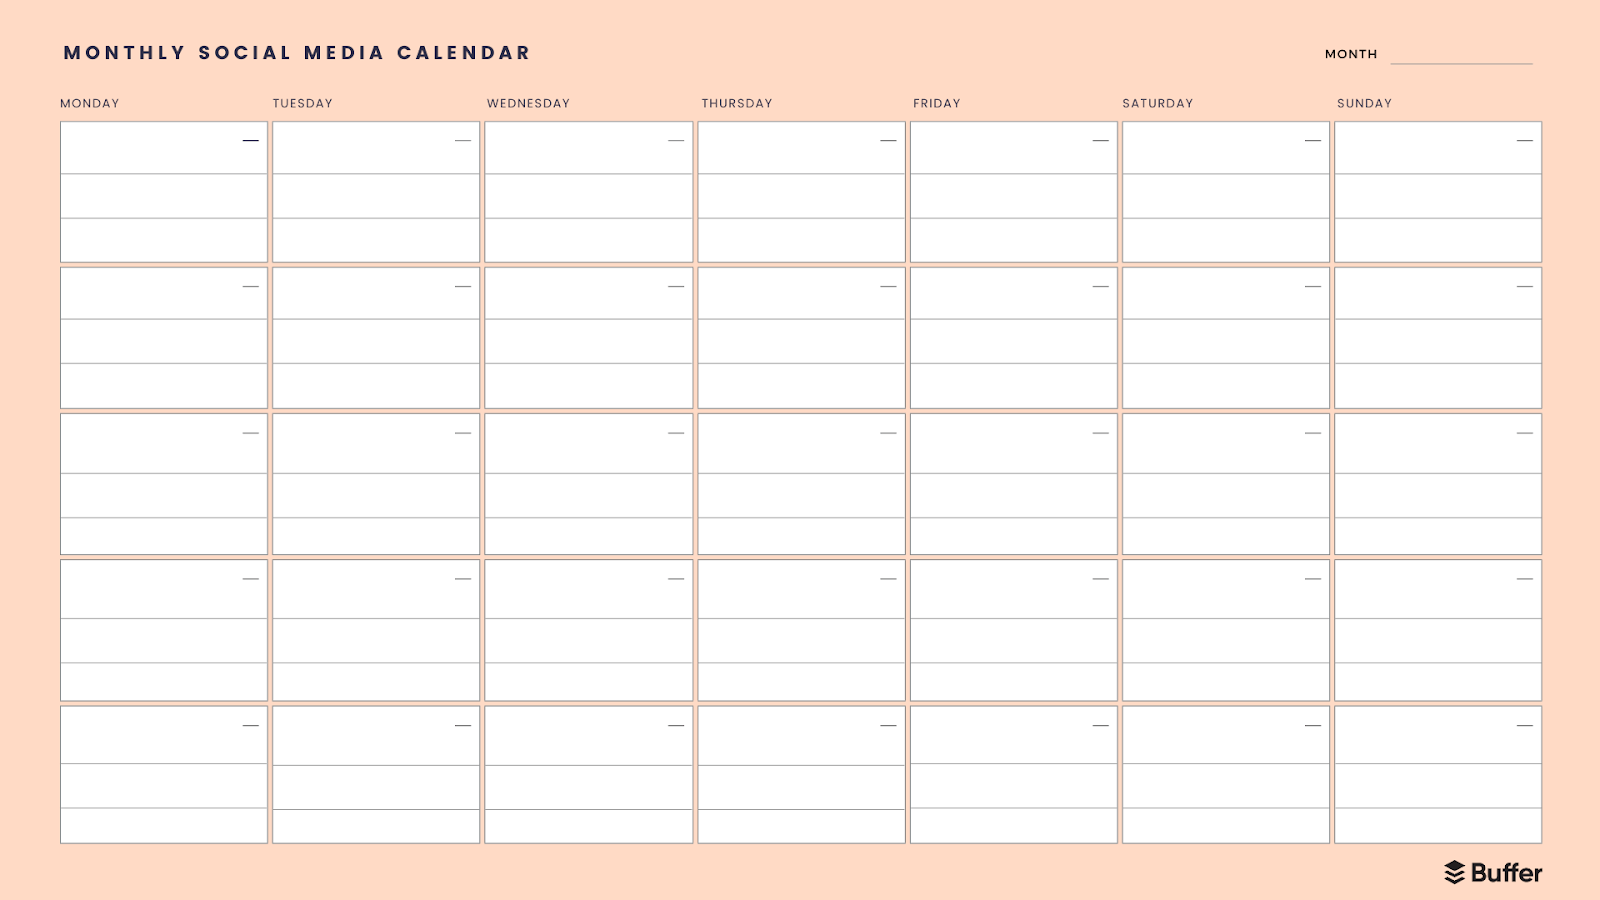 social media calendar monthly - 7+ Free Social Media Calendar Templates to Help You Plan Your Content